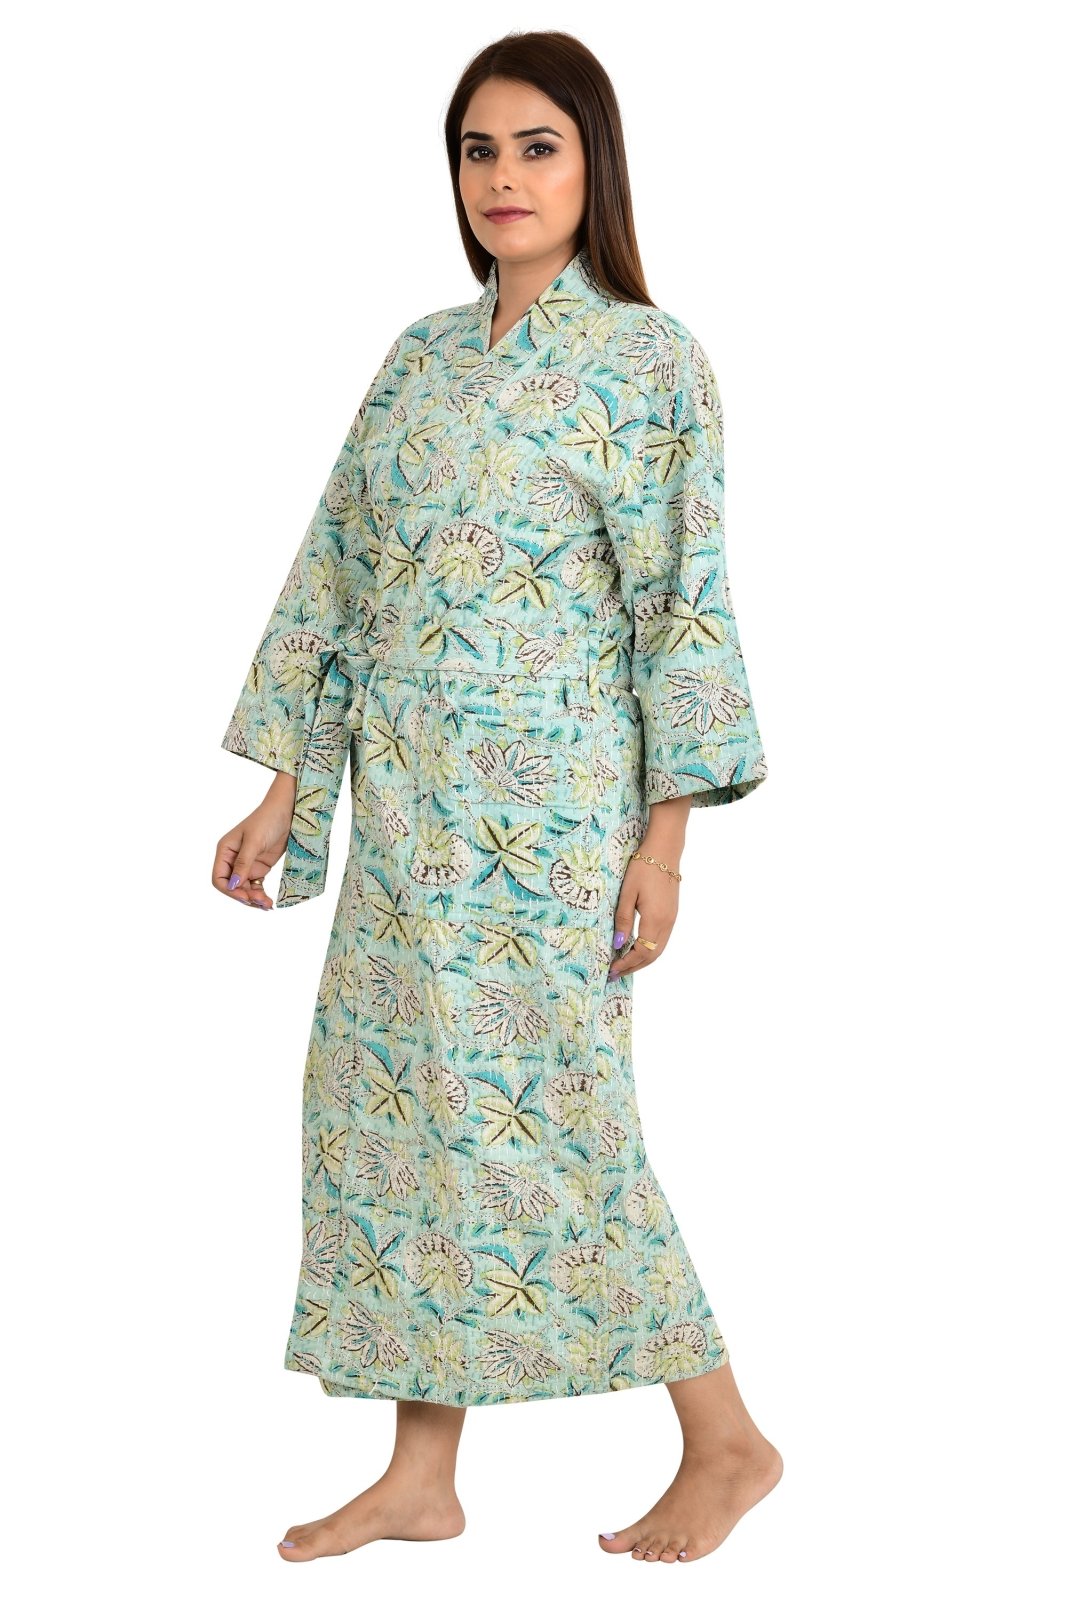 Kantha Stitch 100% Cotton Reversible Long Kimono Women Jacket | Handmade Stitch Robe | Unisex Gift | Green Brown Floral Print - The Eastern Loom